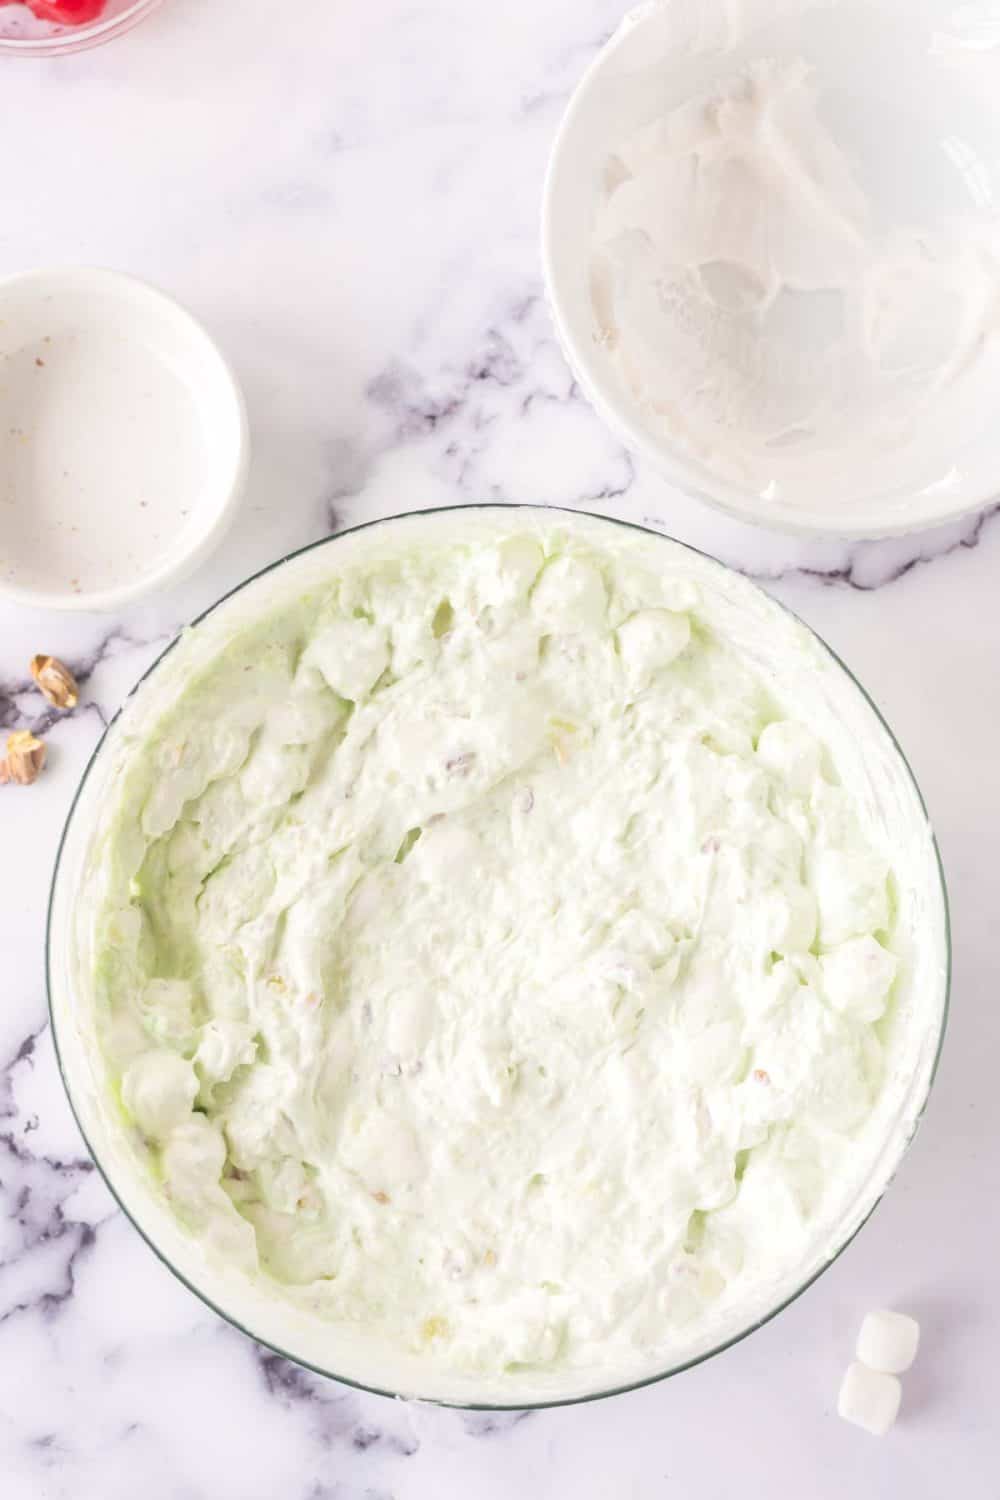 pistachio jello salad ingredients coming together.